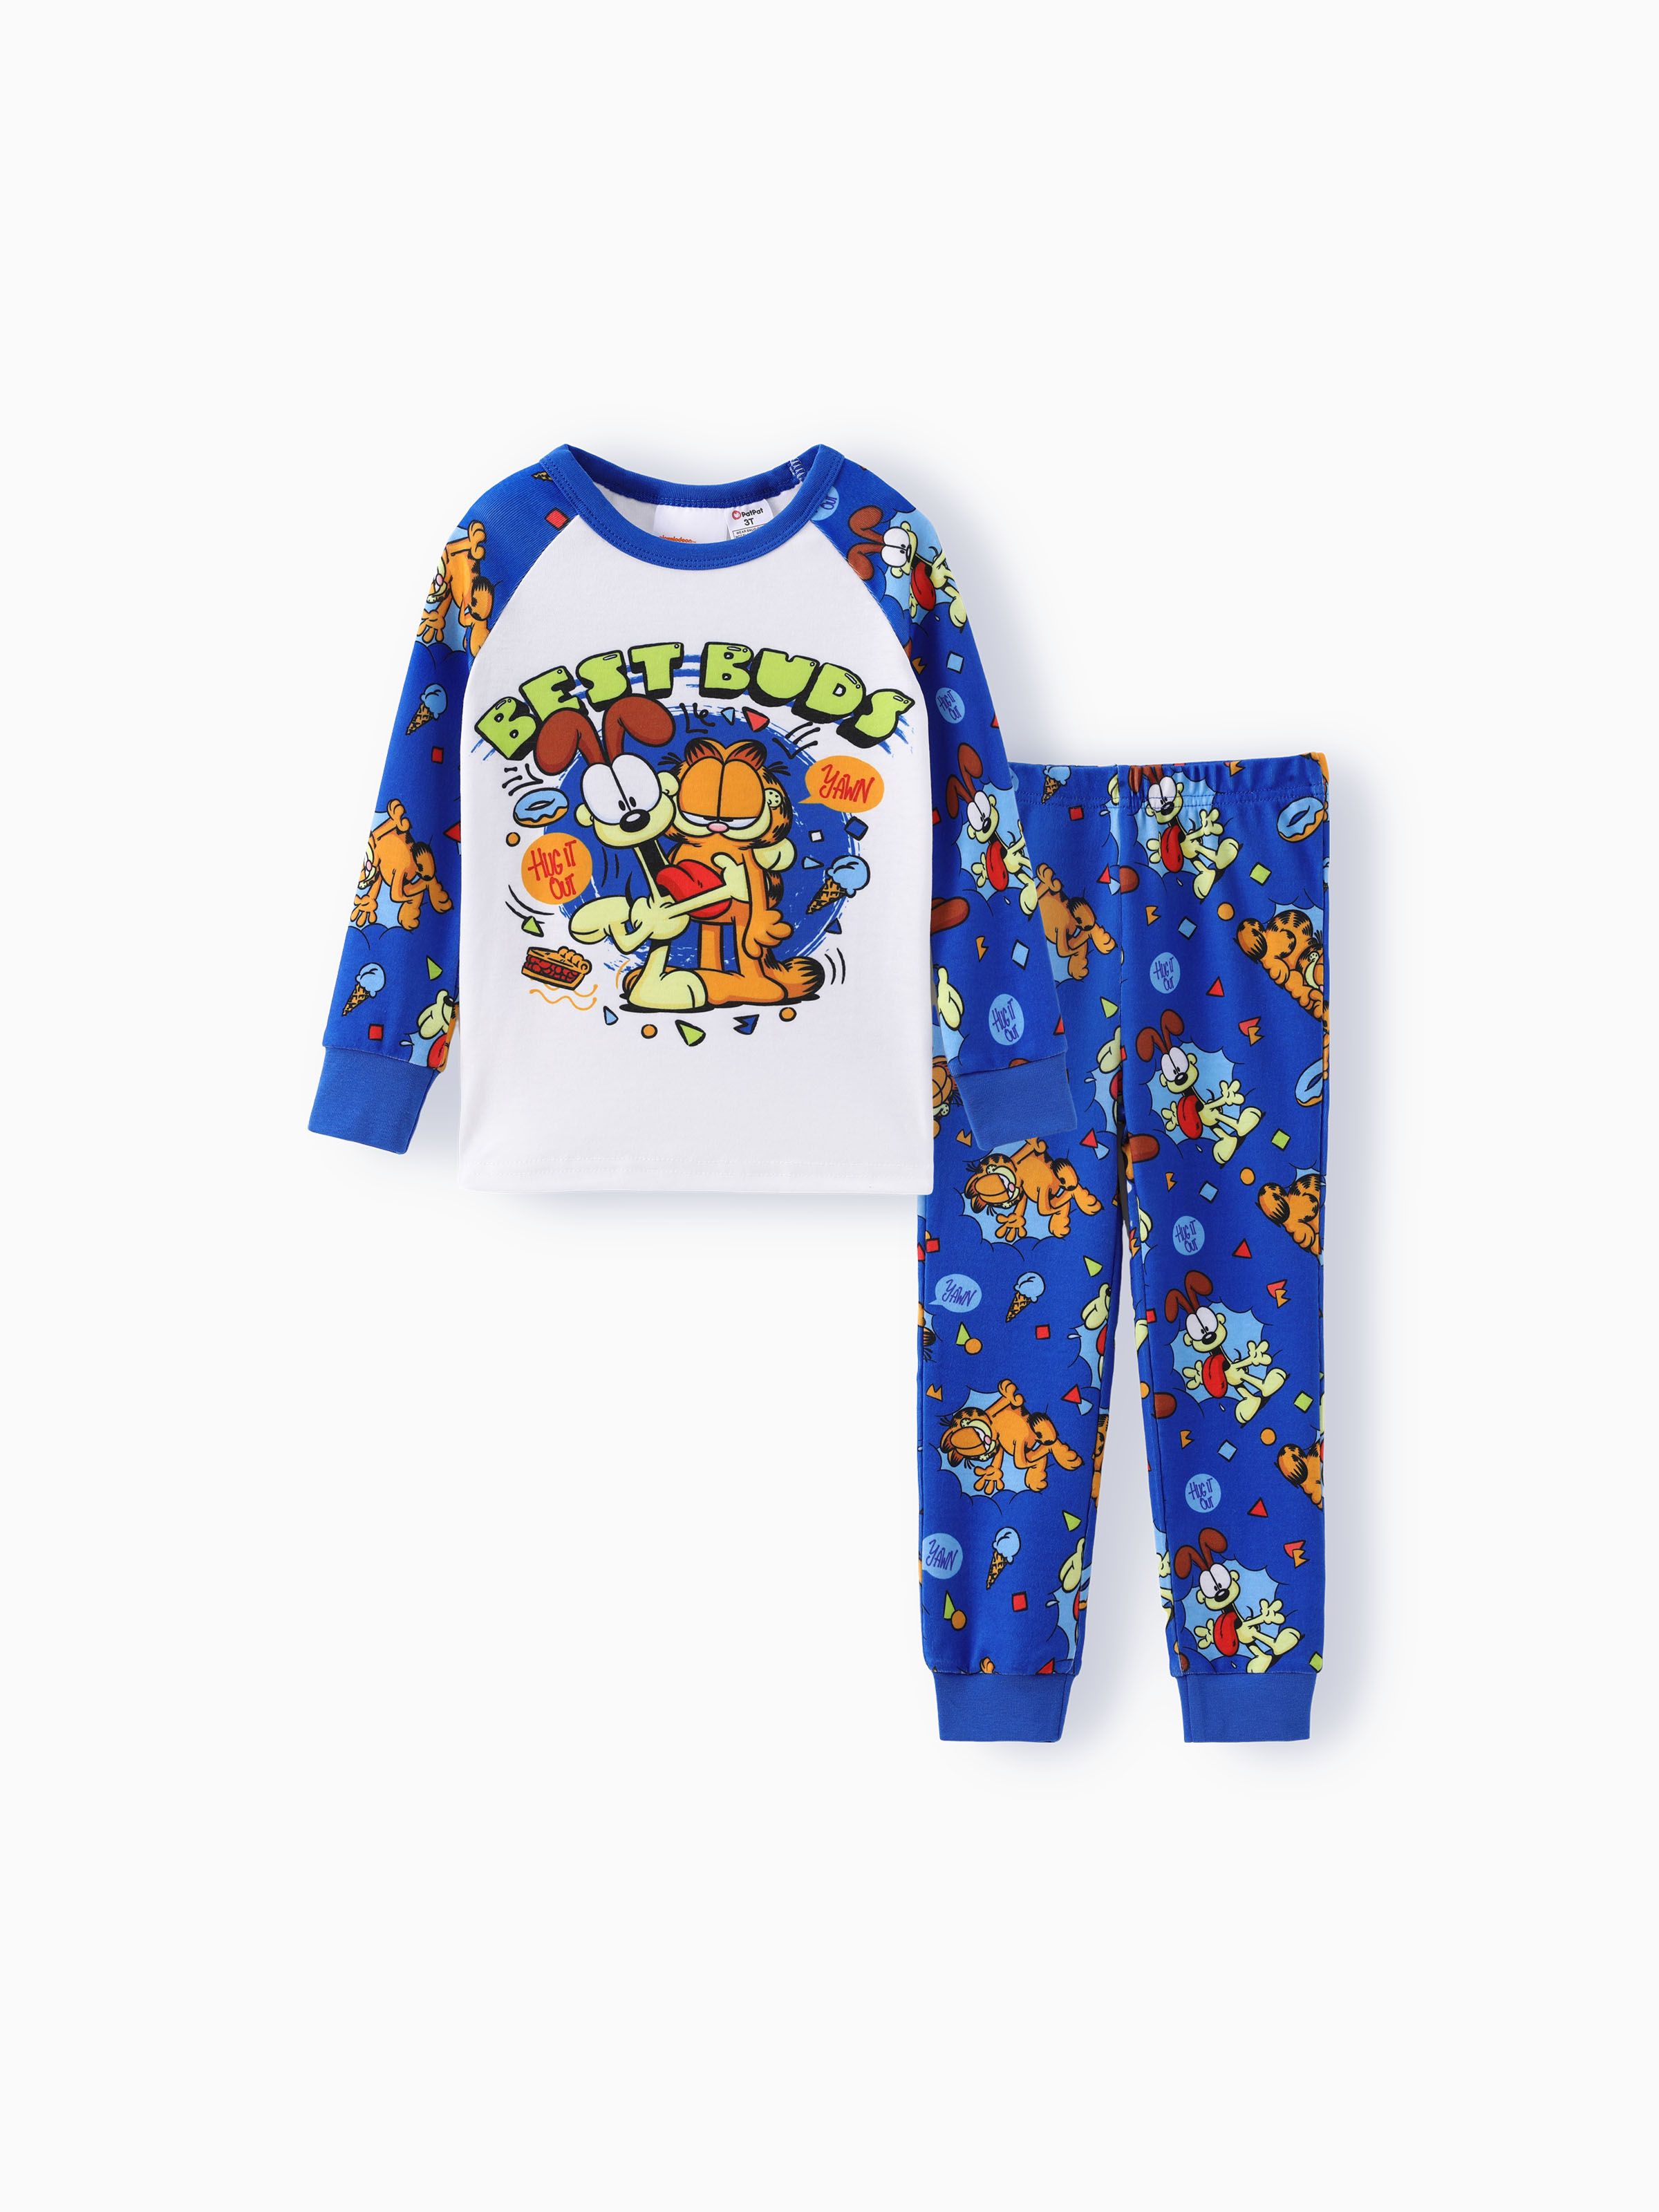 

Garfield Toddler Boy/Girl 2pcs All-over Print Tight Pajamas Set